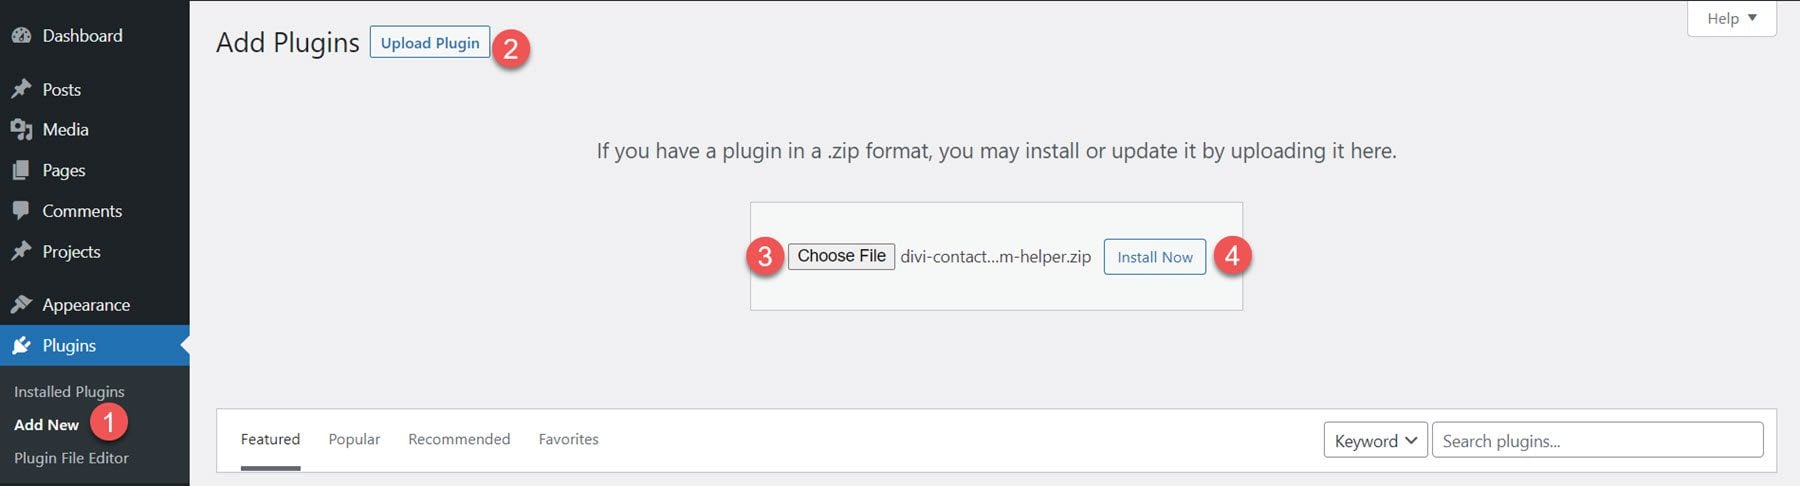 Divi Plugin Highlight Divi Contact Form Helper Install